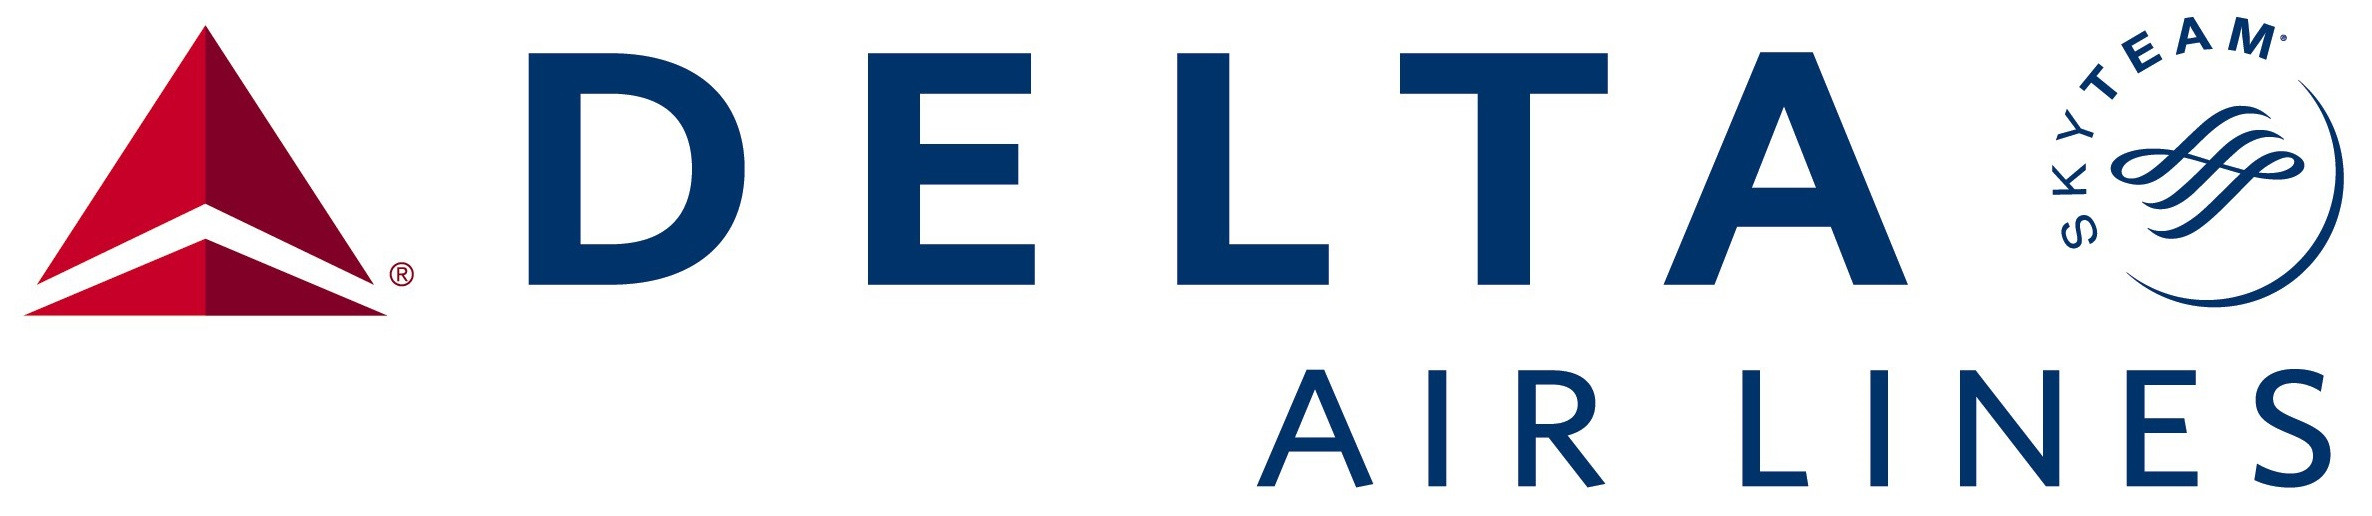 Delta Airlines serive from USA to Edinburgh Airport EDI - Business Class chauffeur transfers to Edinburgh